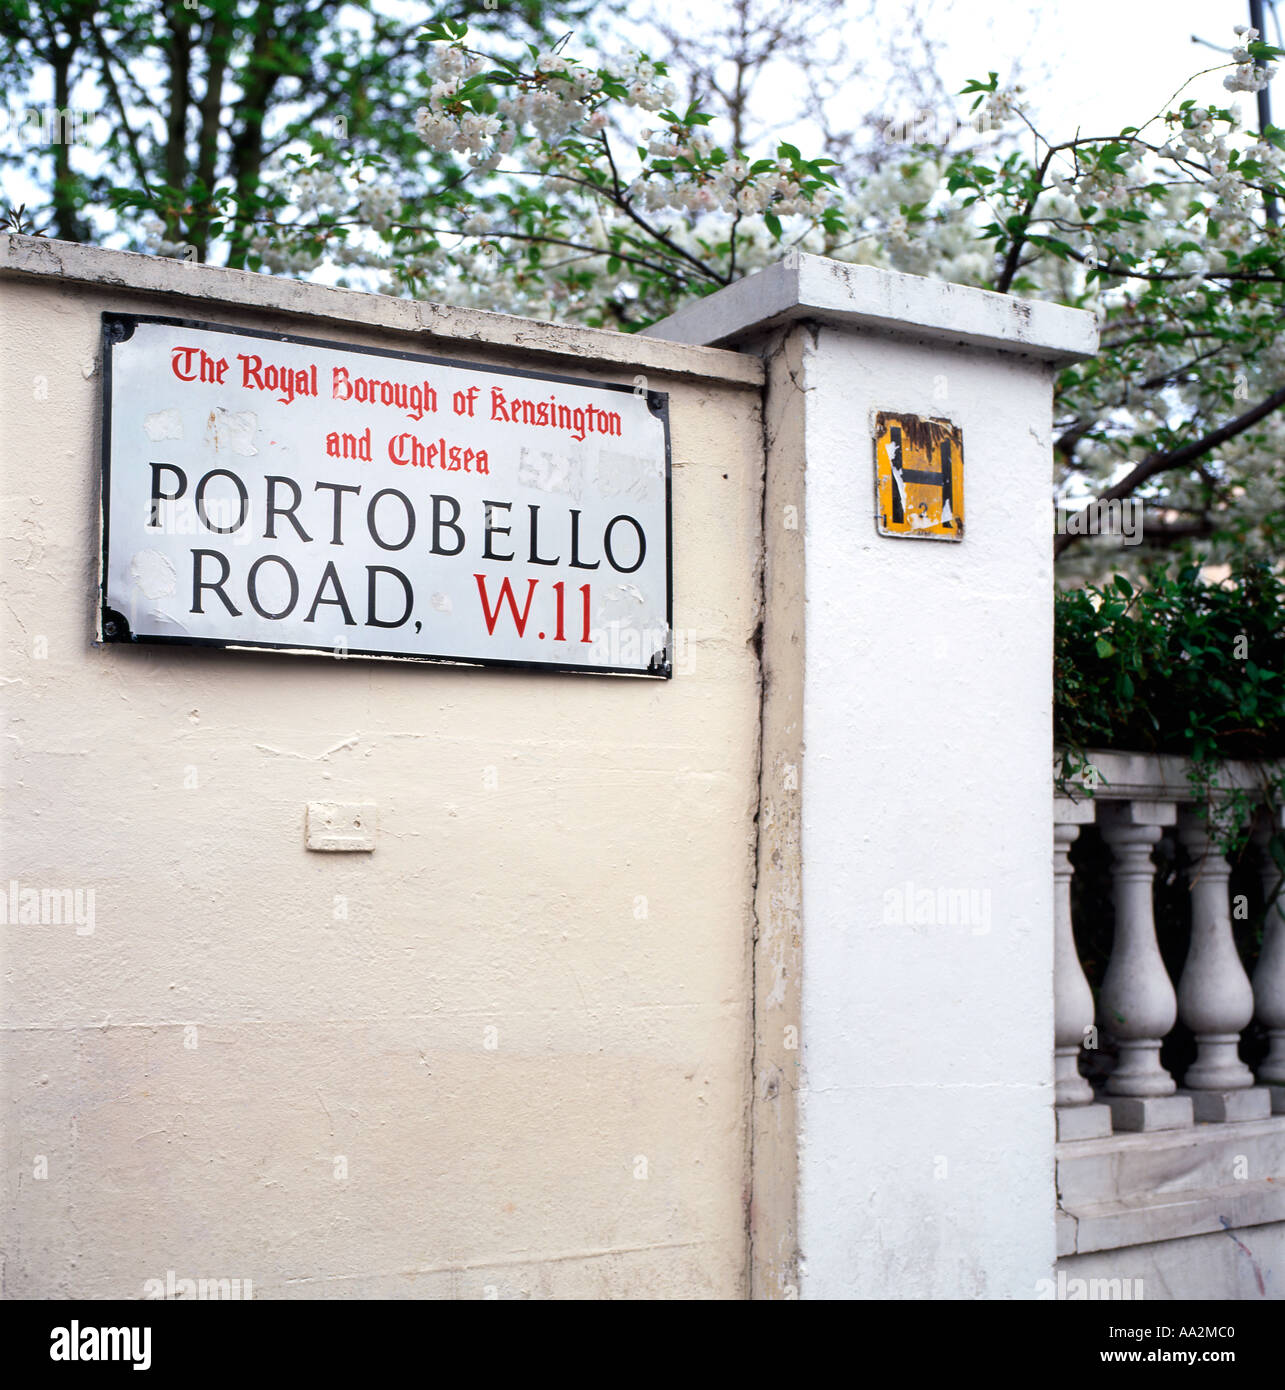 Portobello Road Street sign West London England UK Stock Photo